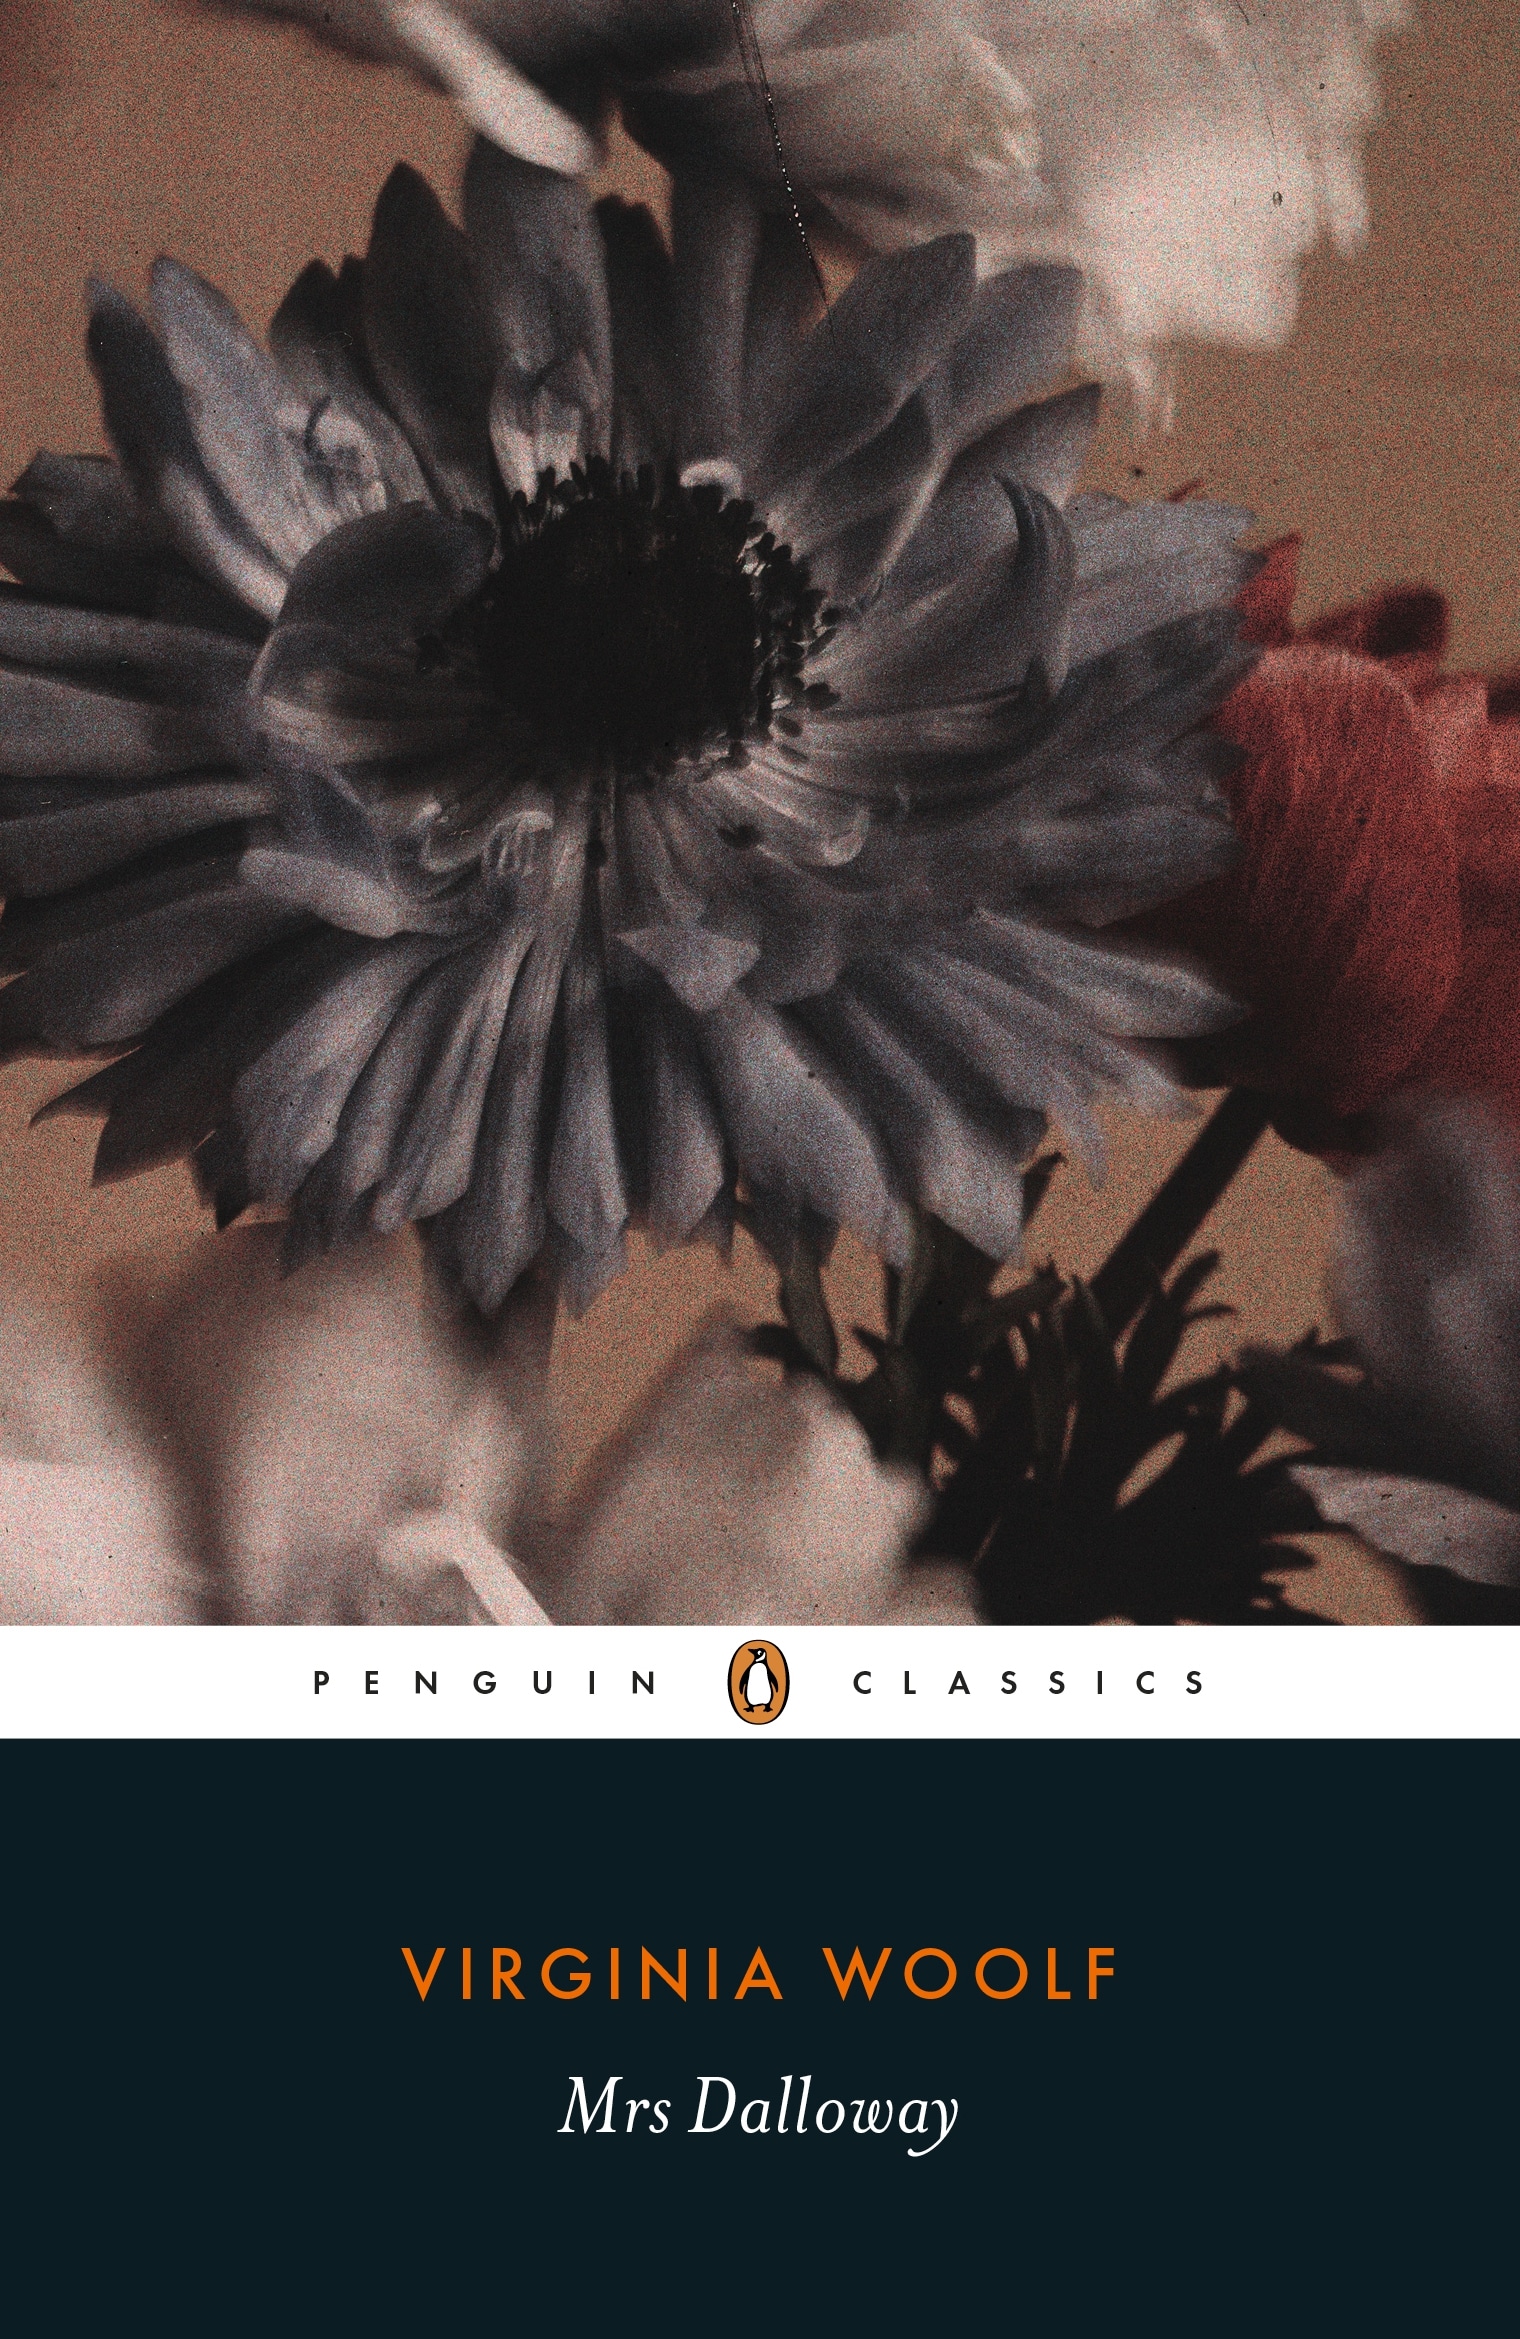 Book “Mrs Dalloway” by Virginia Woolf, Stella McNichol — April 4, 2019